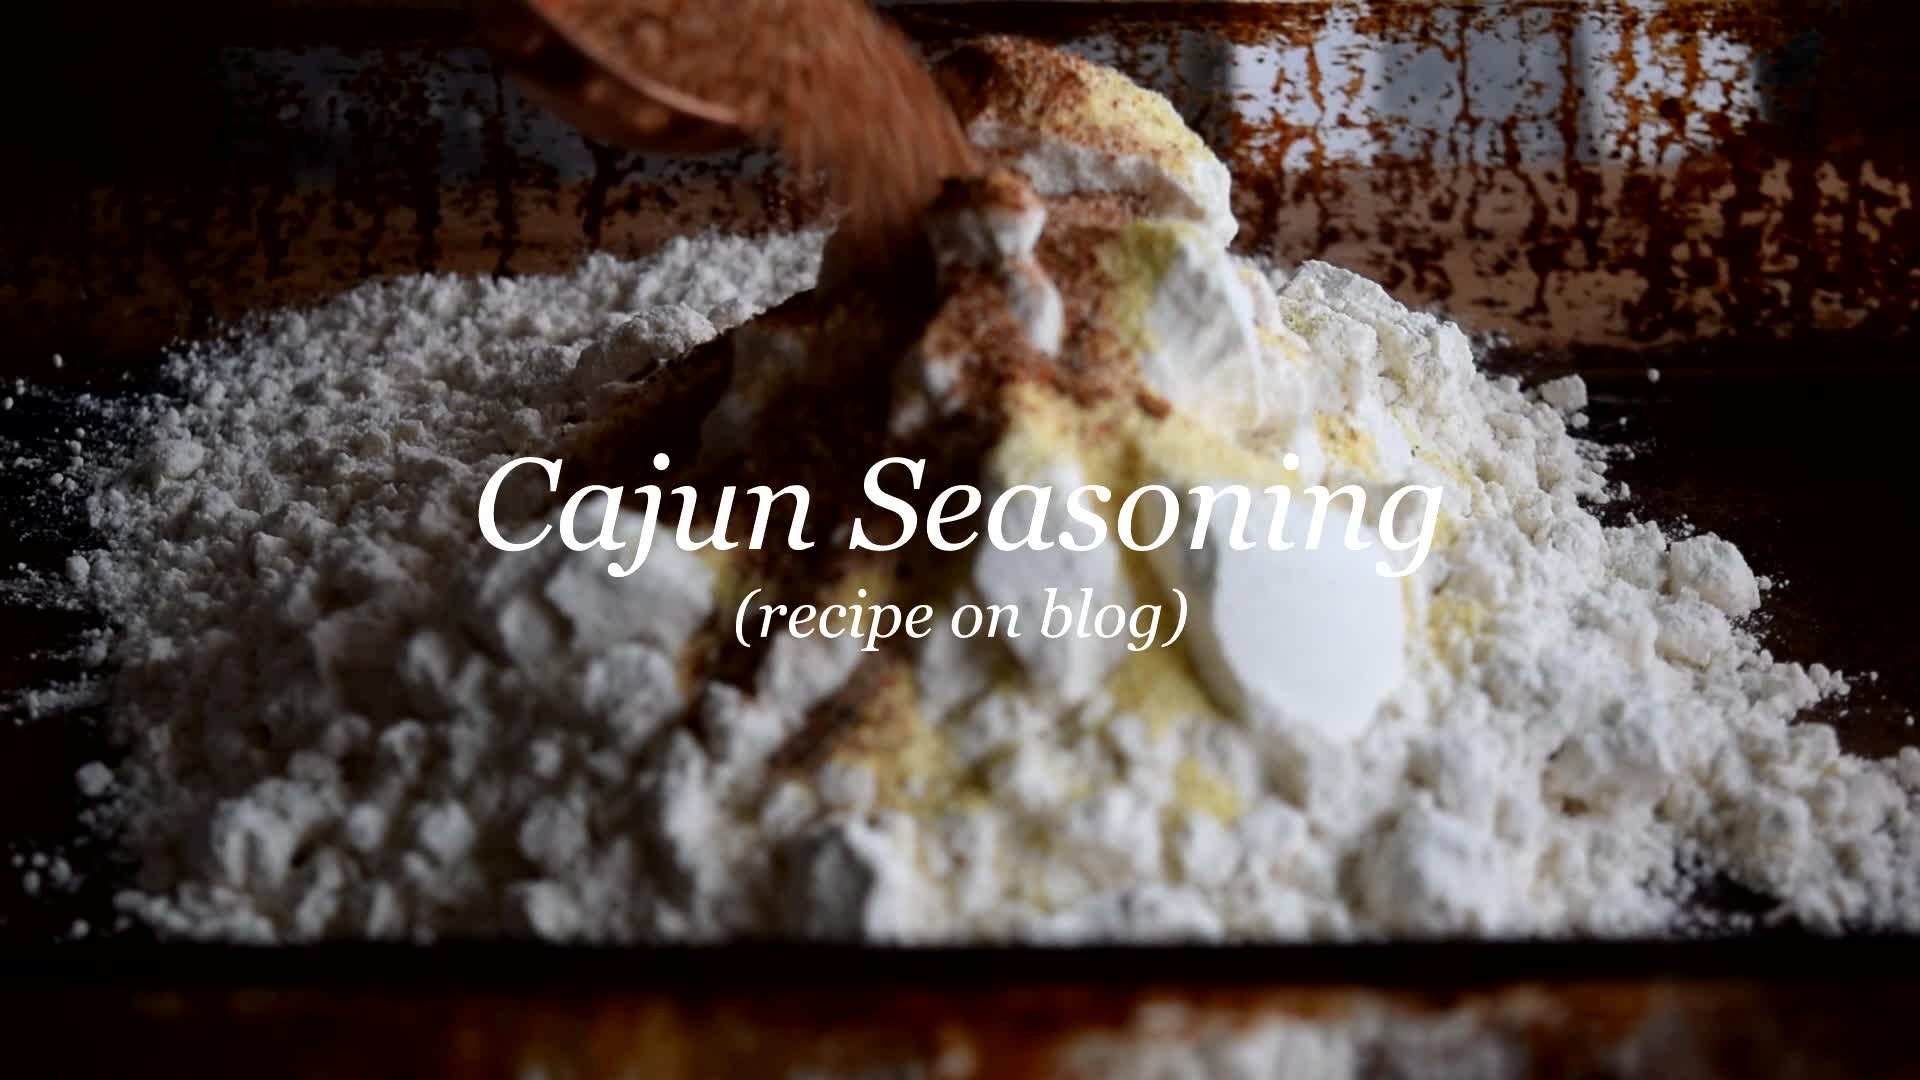 Cajun Fried Chicken - Living The Gourmet